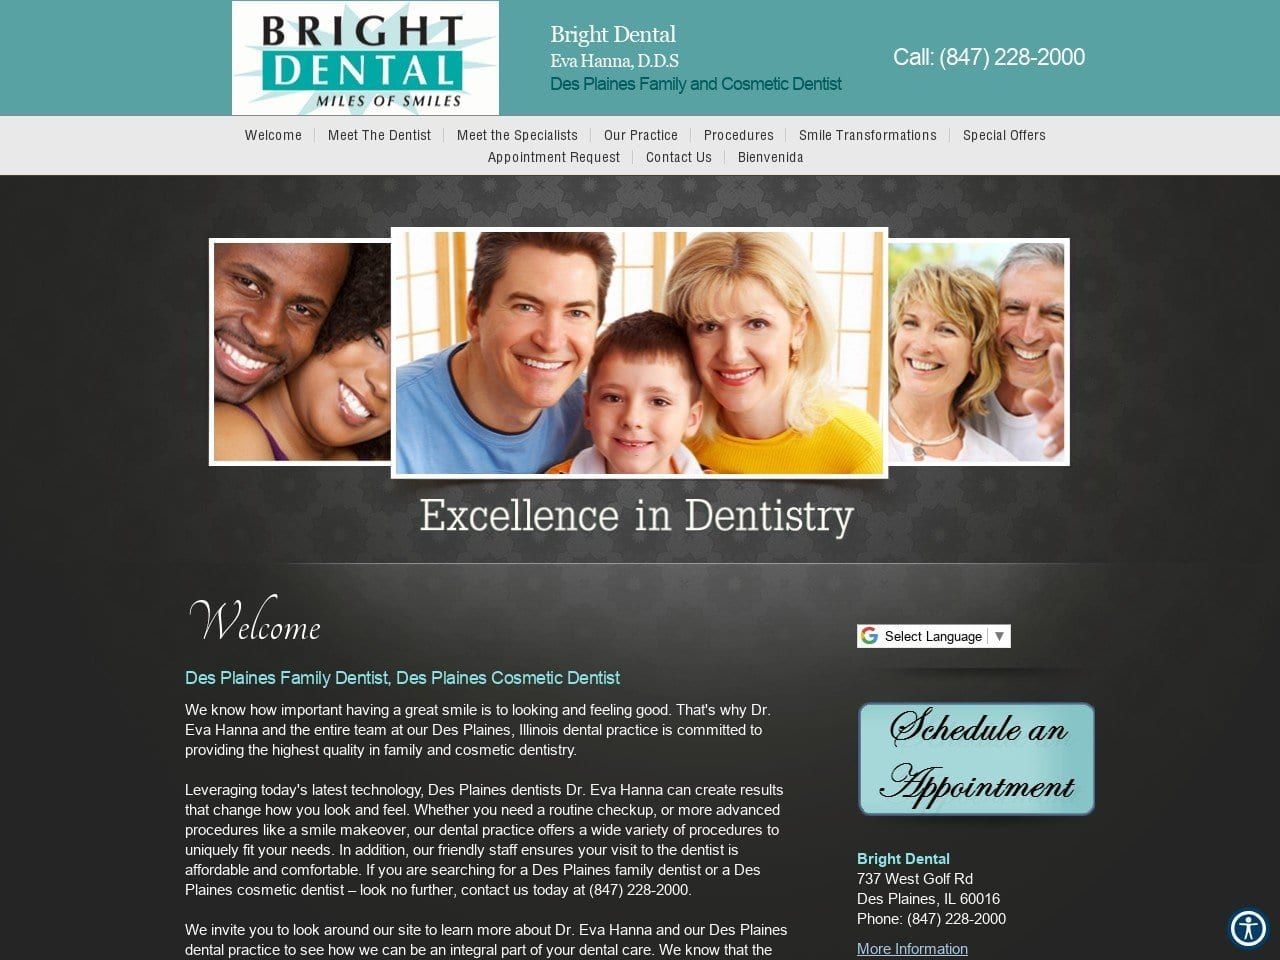 Ourbright Dental Website Screenshot from ourbrightdental.com